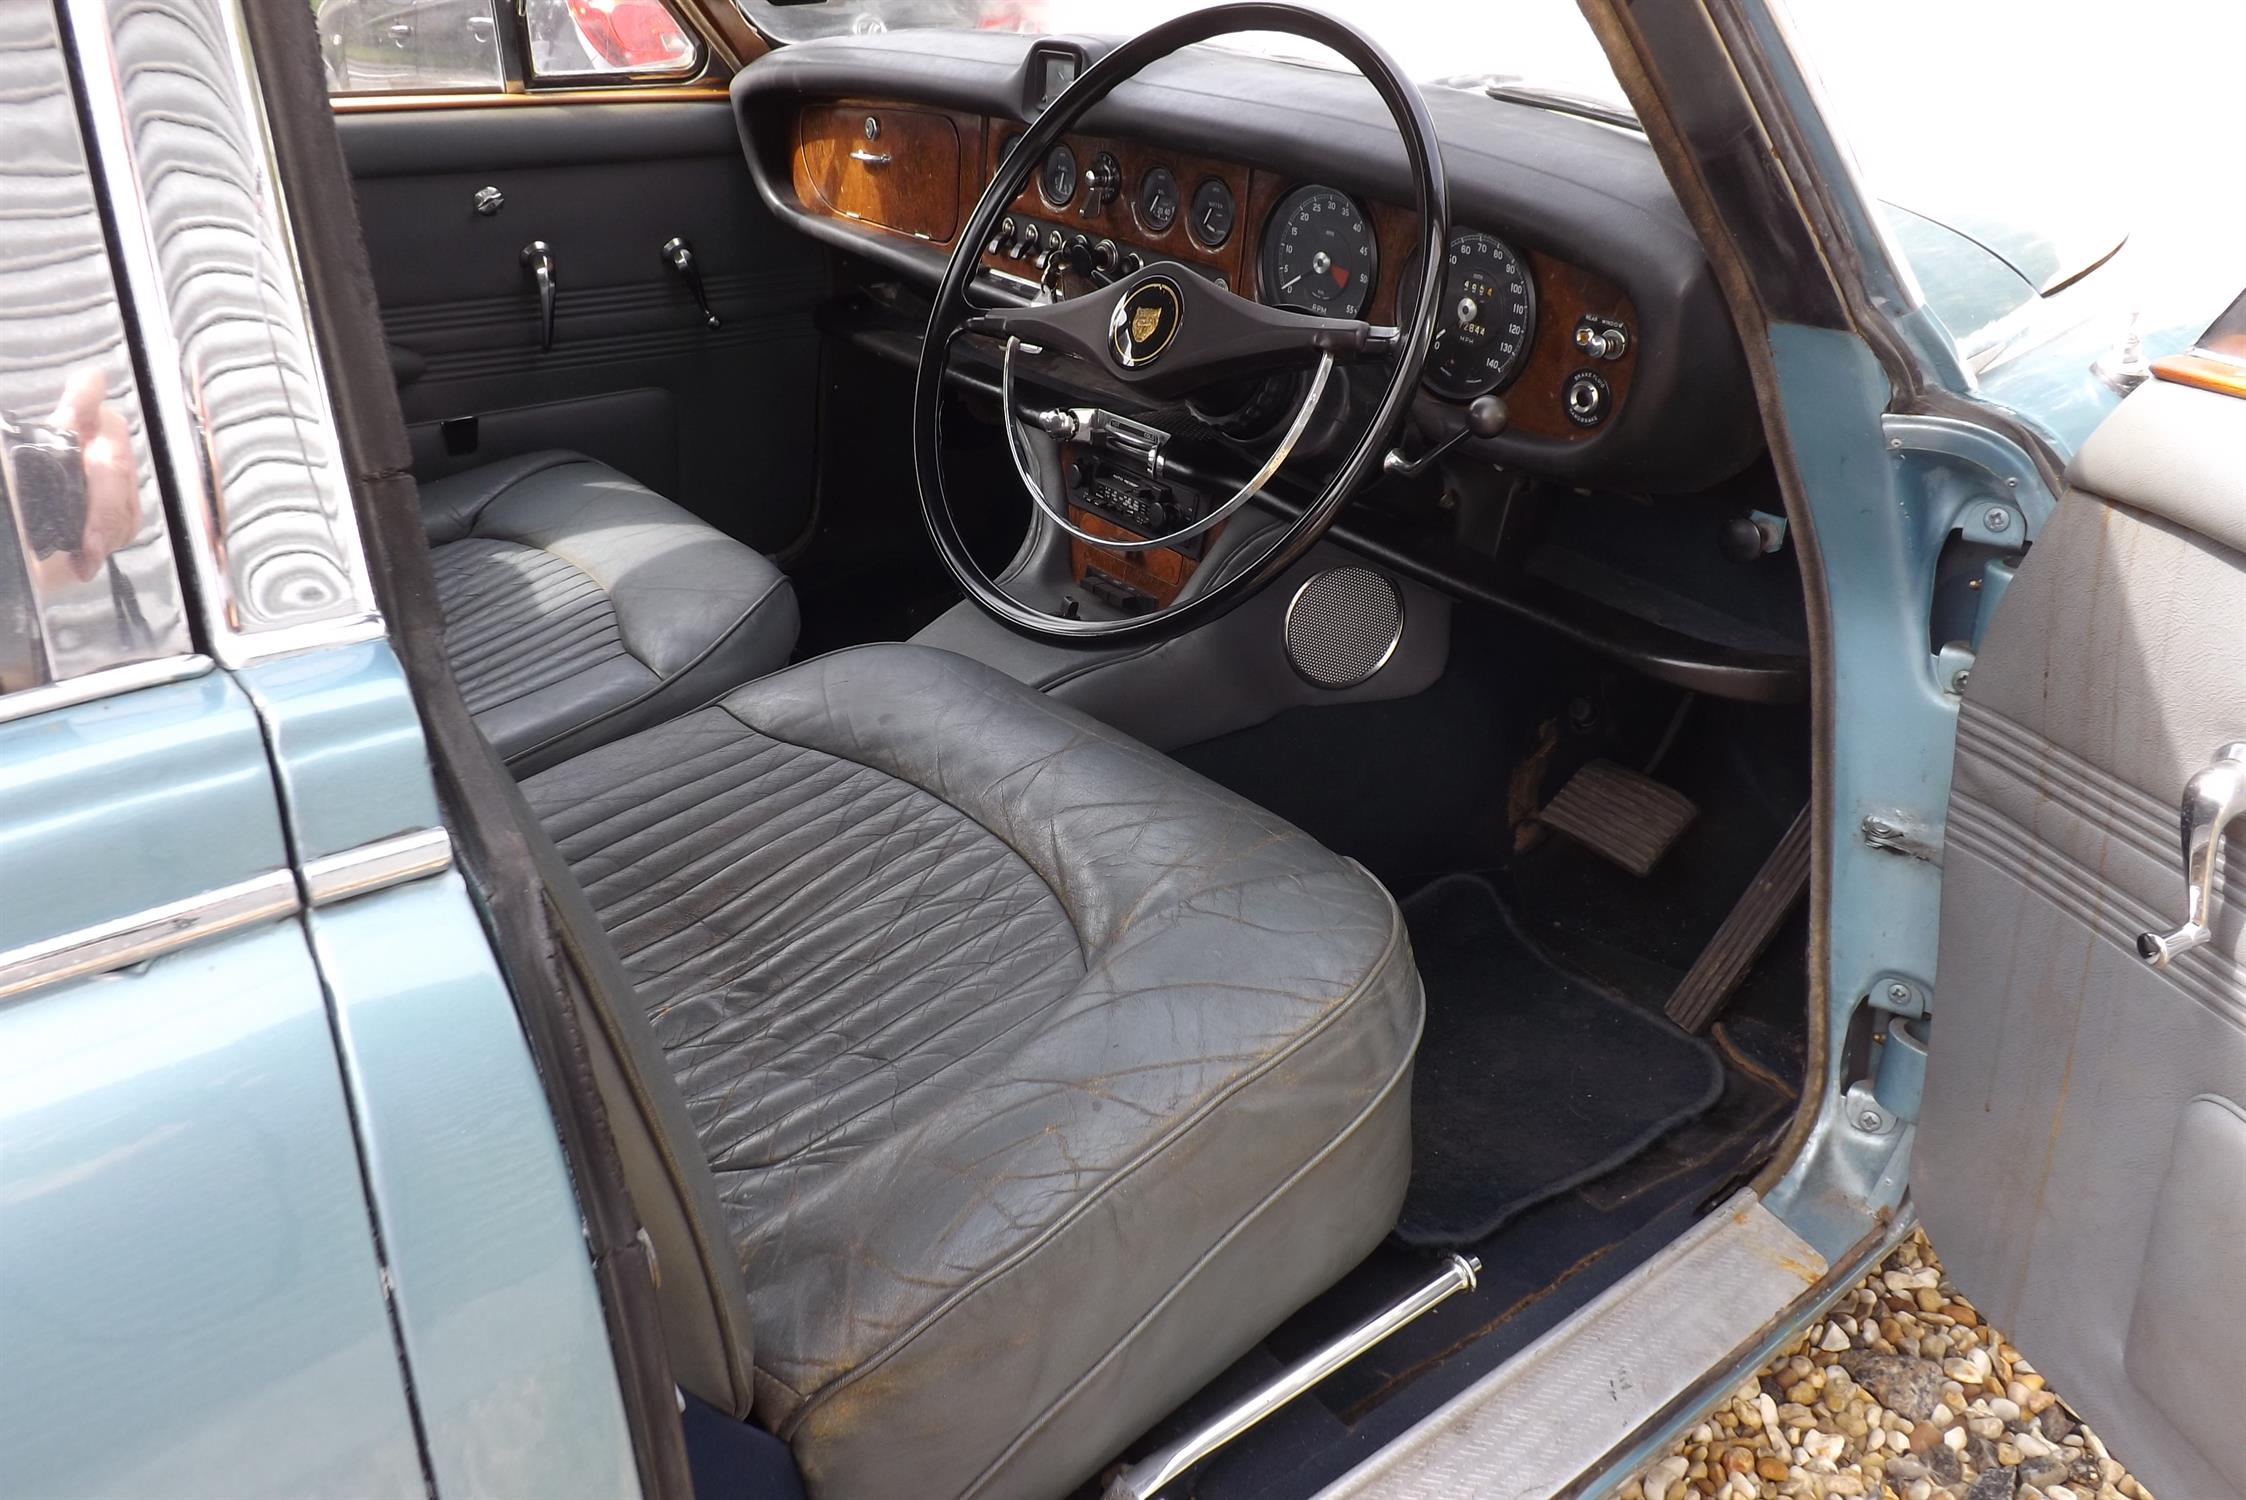 1968 Jaguar 420 Saloon - Image 2 of 10